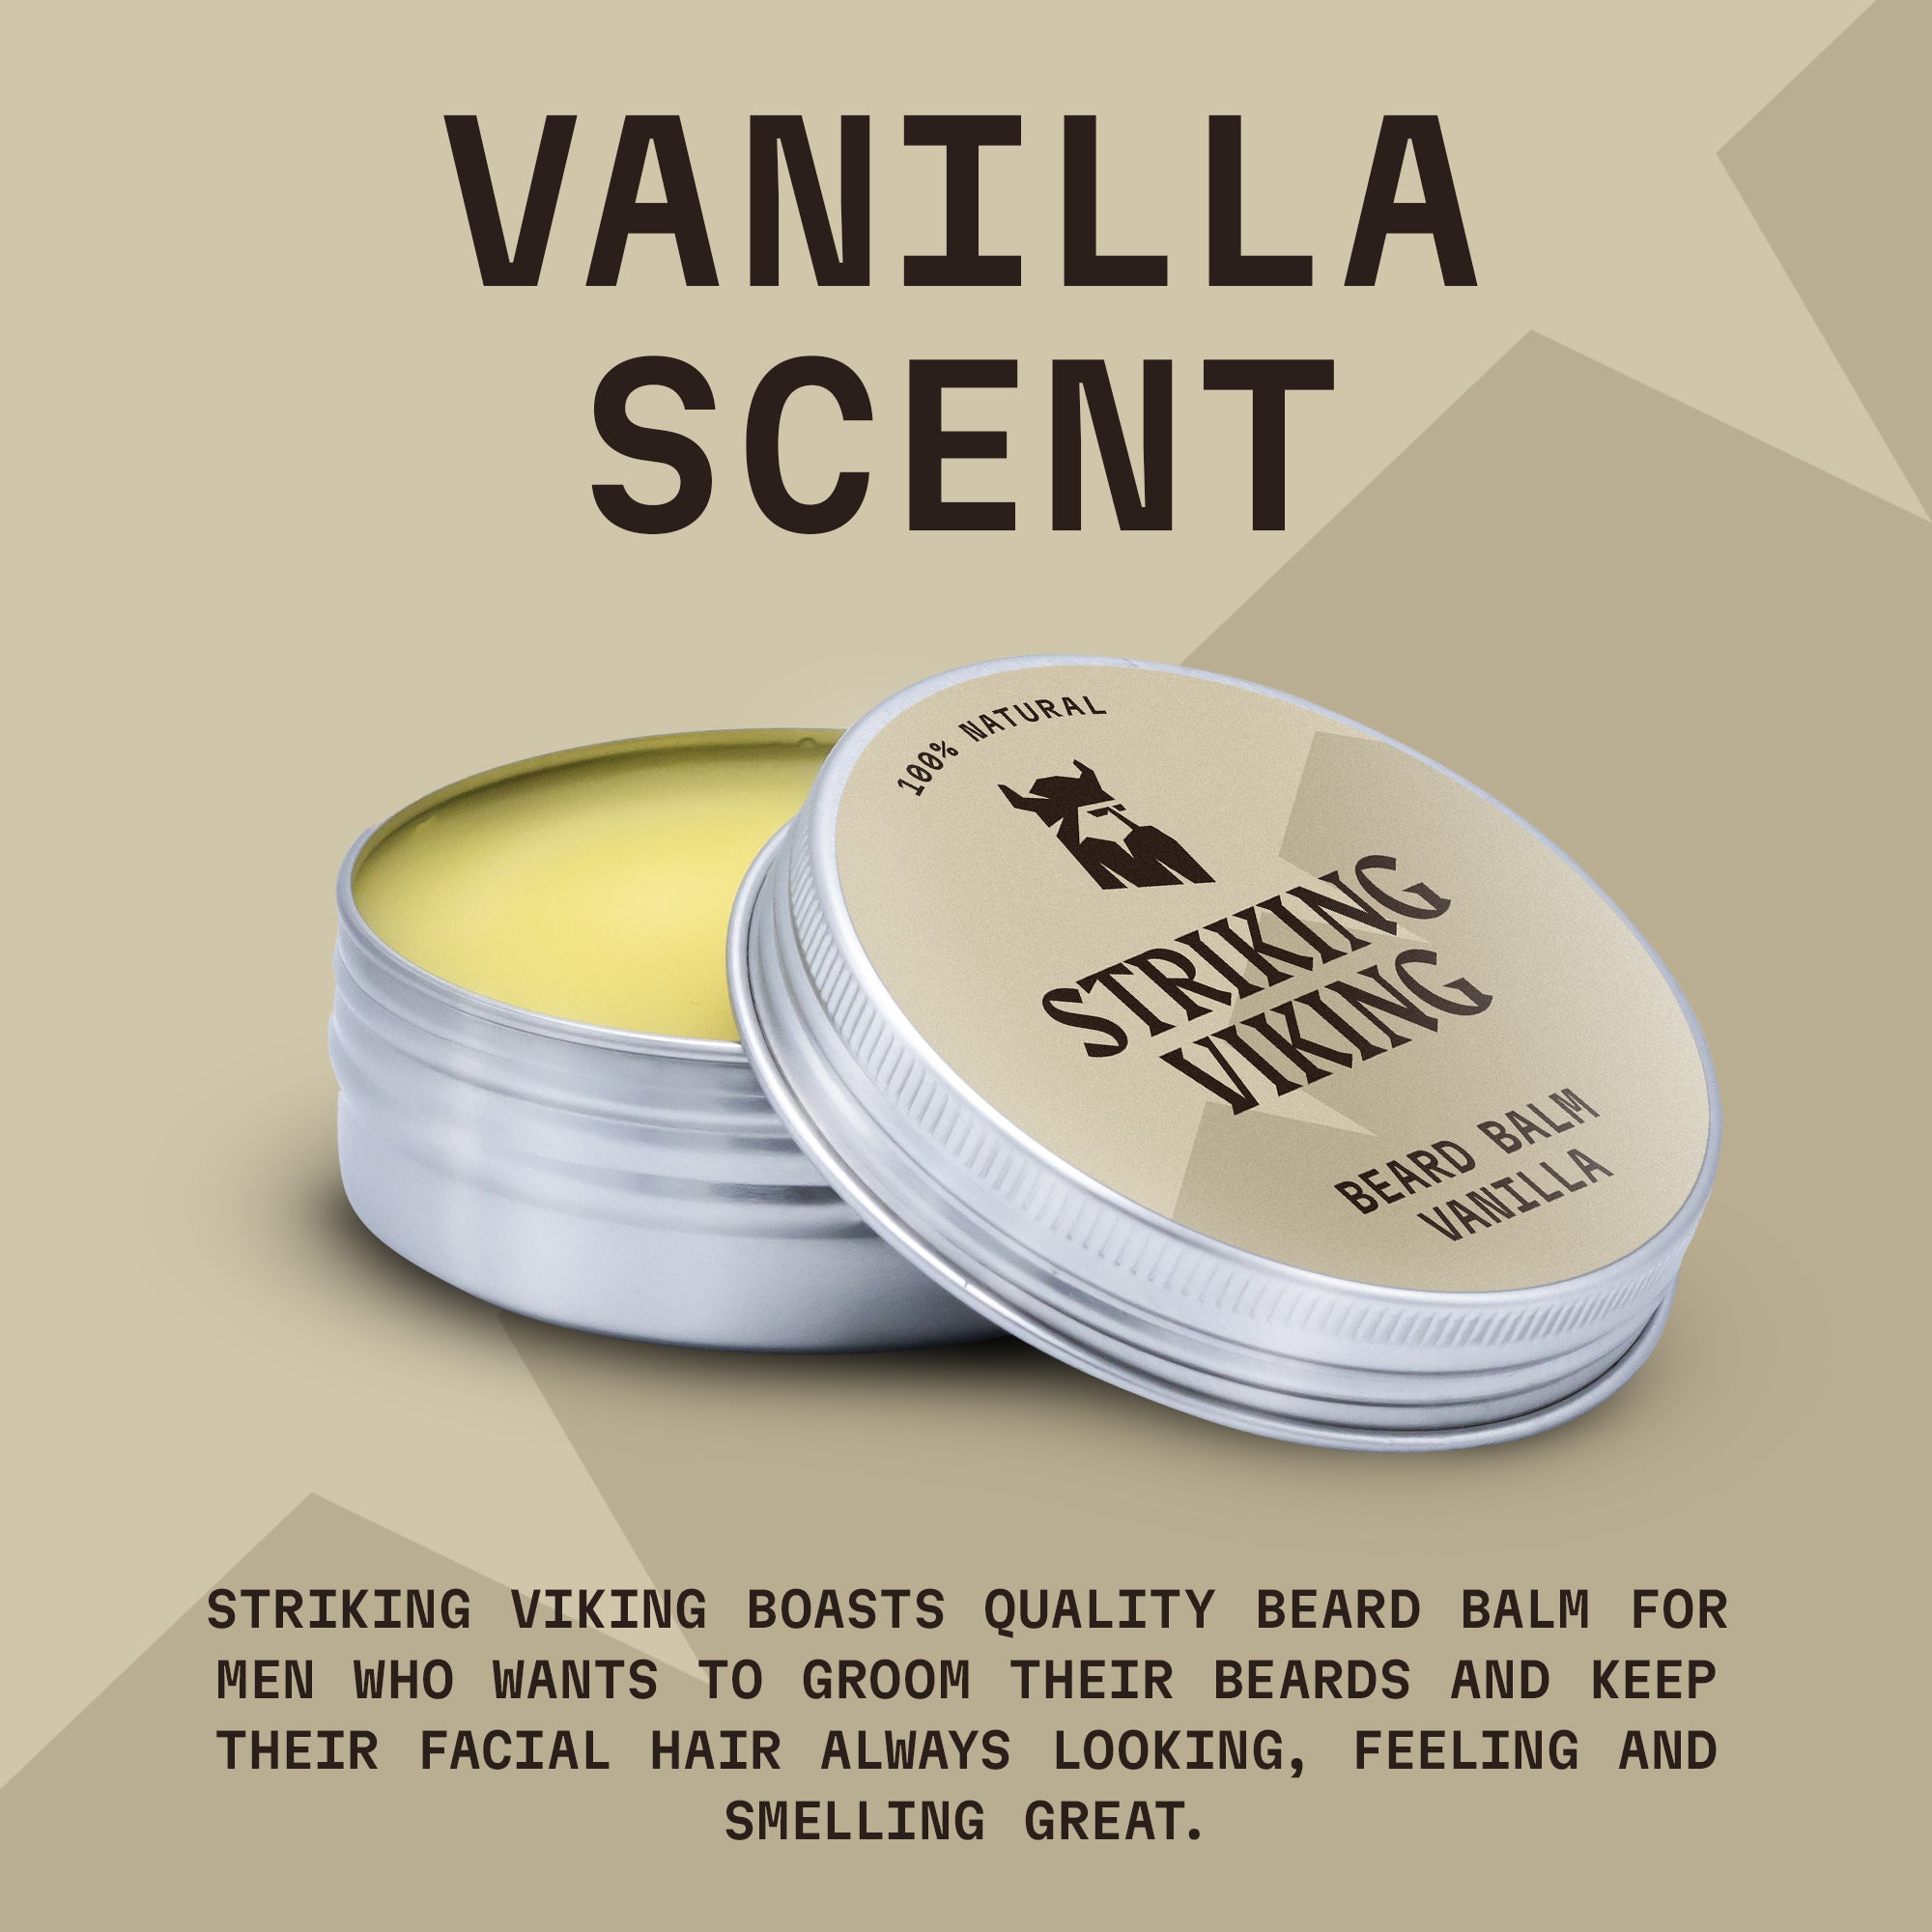 Beard Balm (Vanilla)